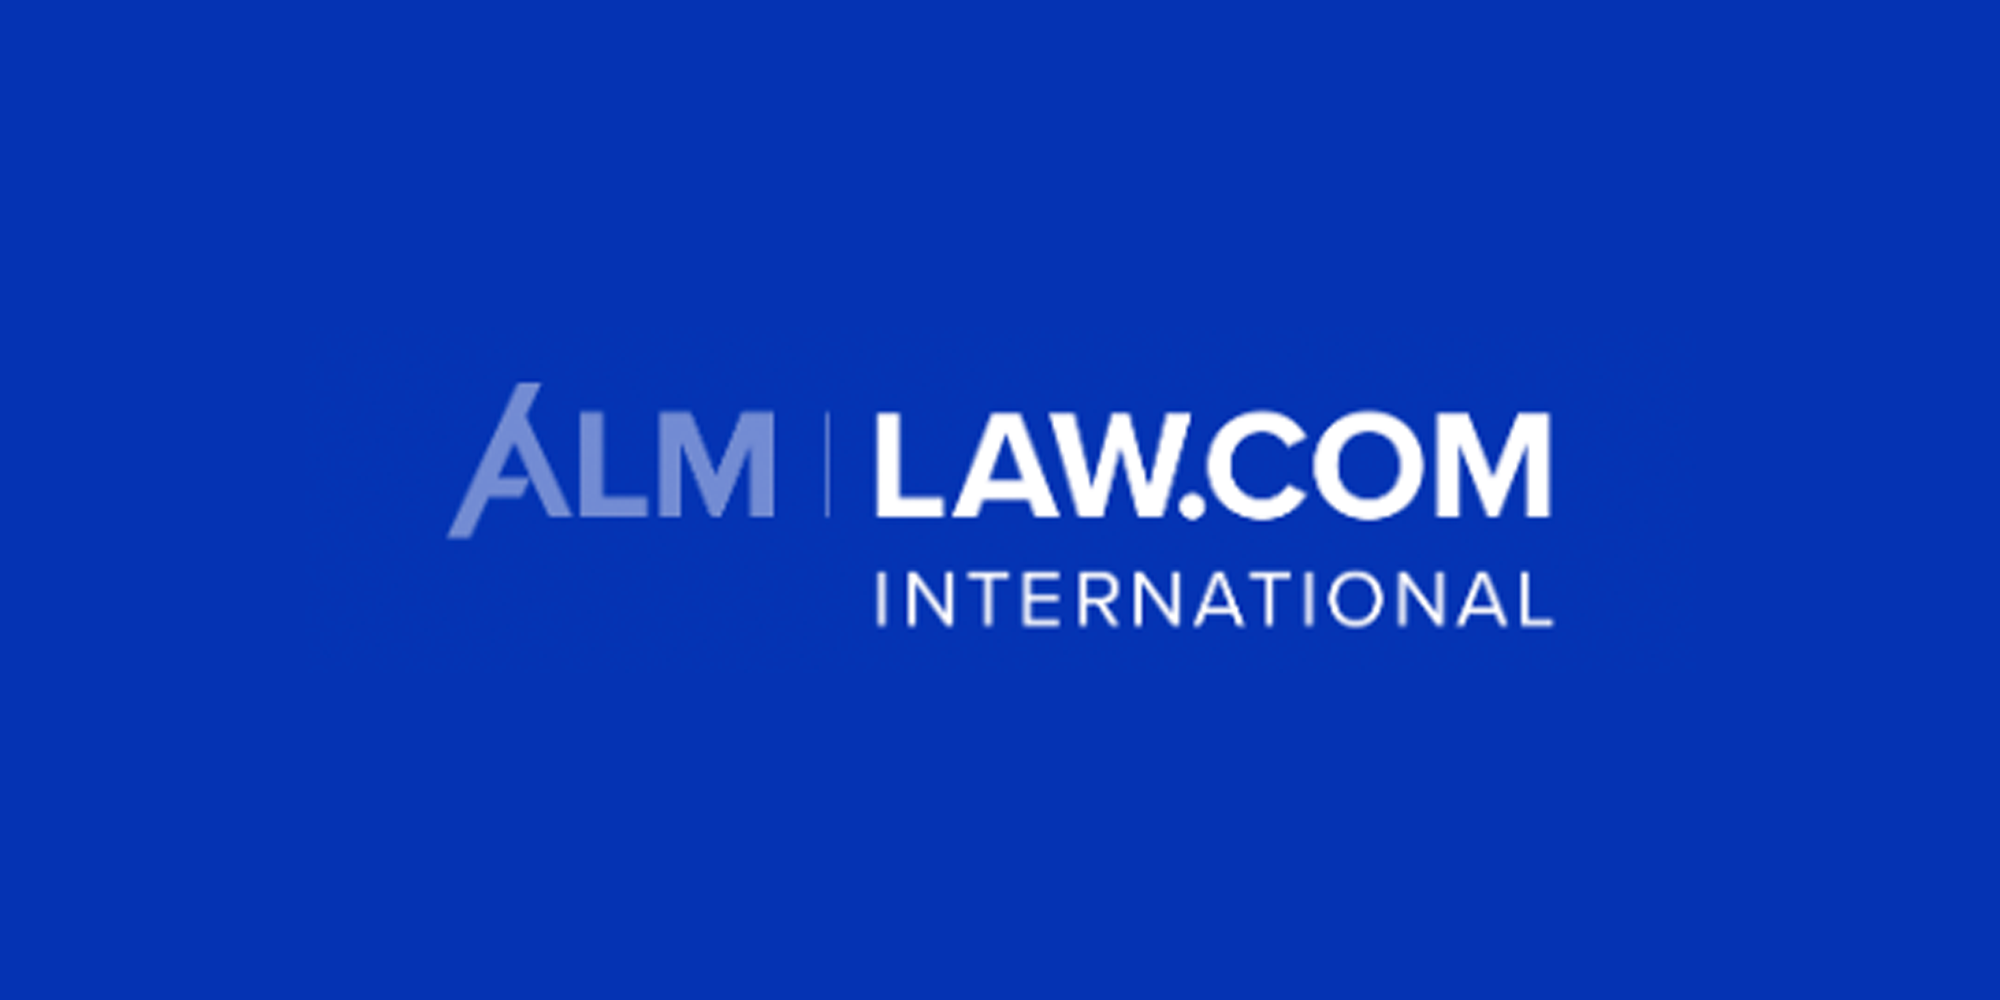 ALM, Law.com International